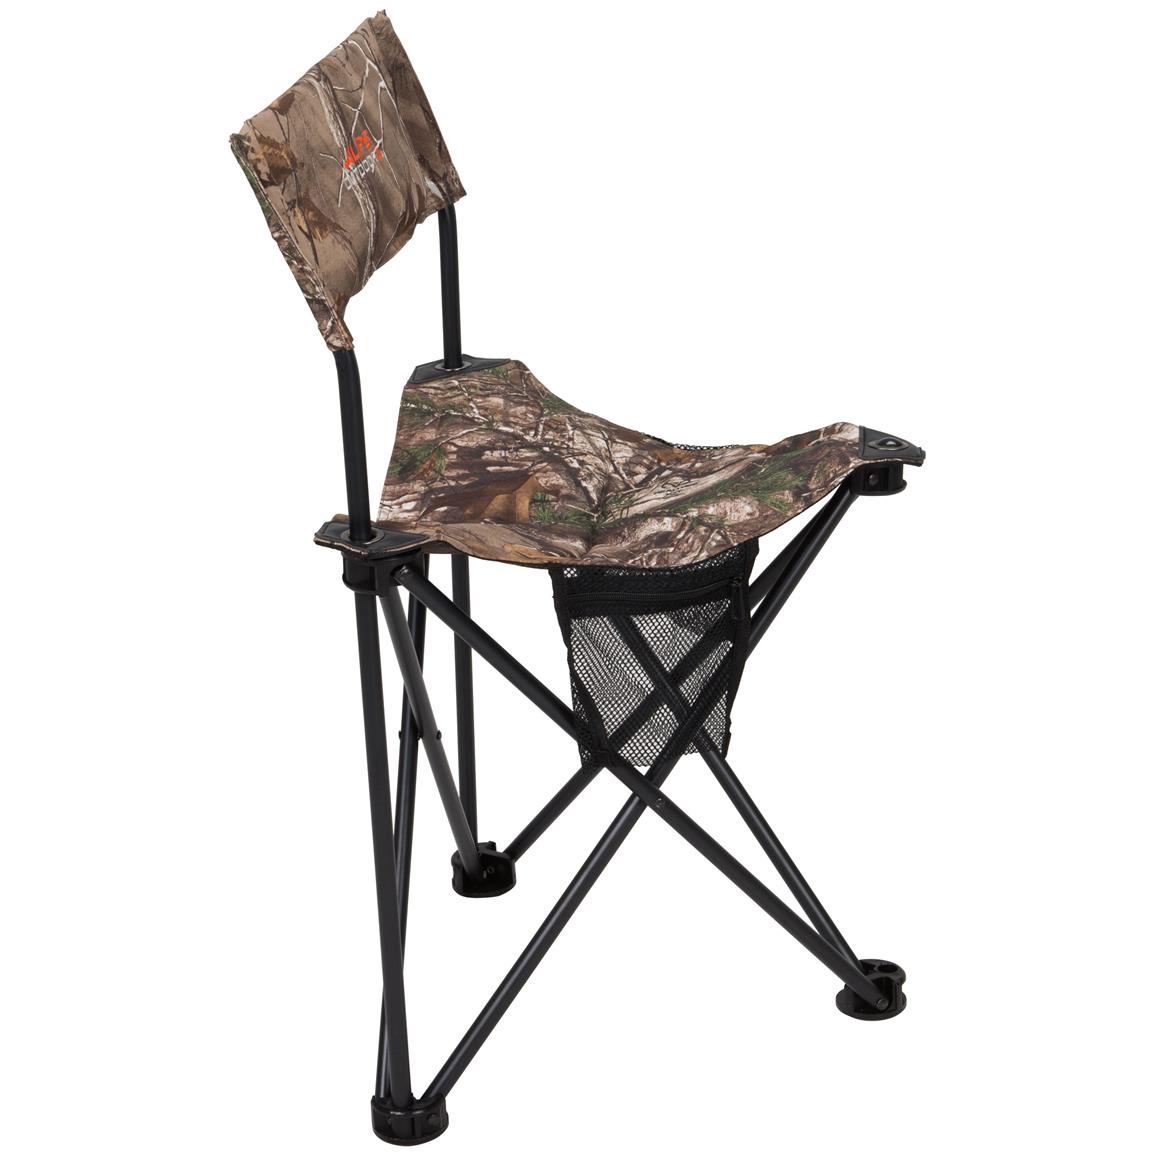 Bolderton XL Swivel Tower Blind Chair Powder-coated Steel Frame Waterproof Seat 